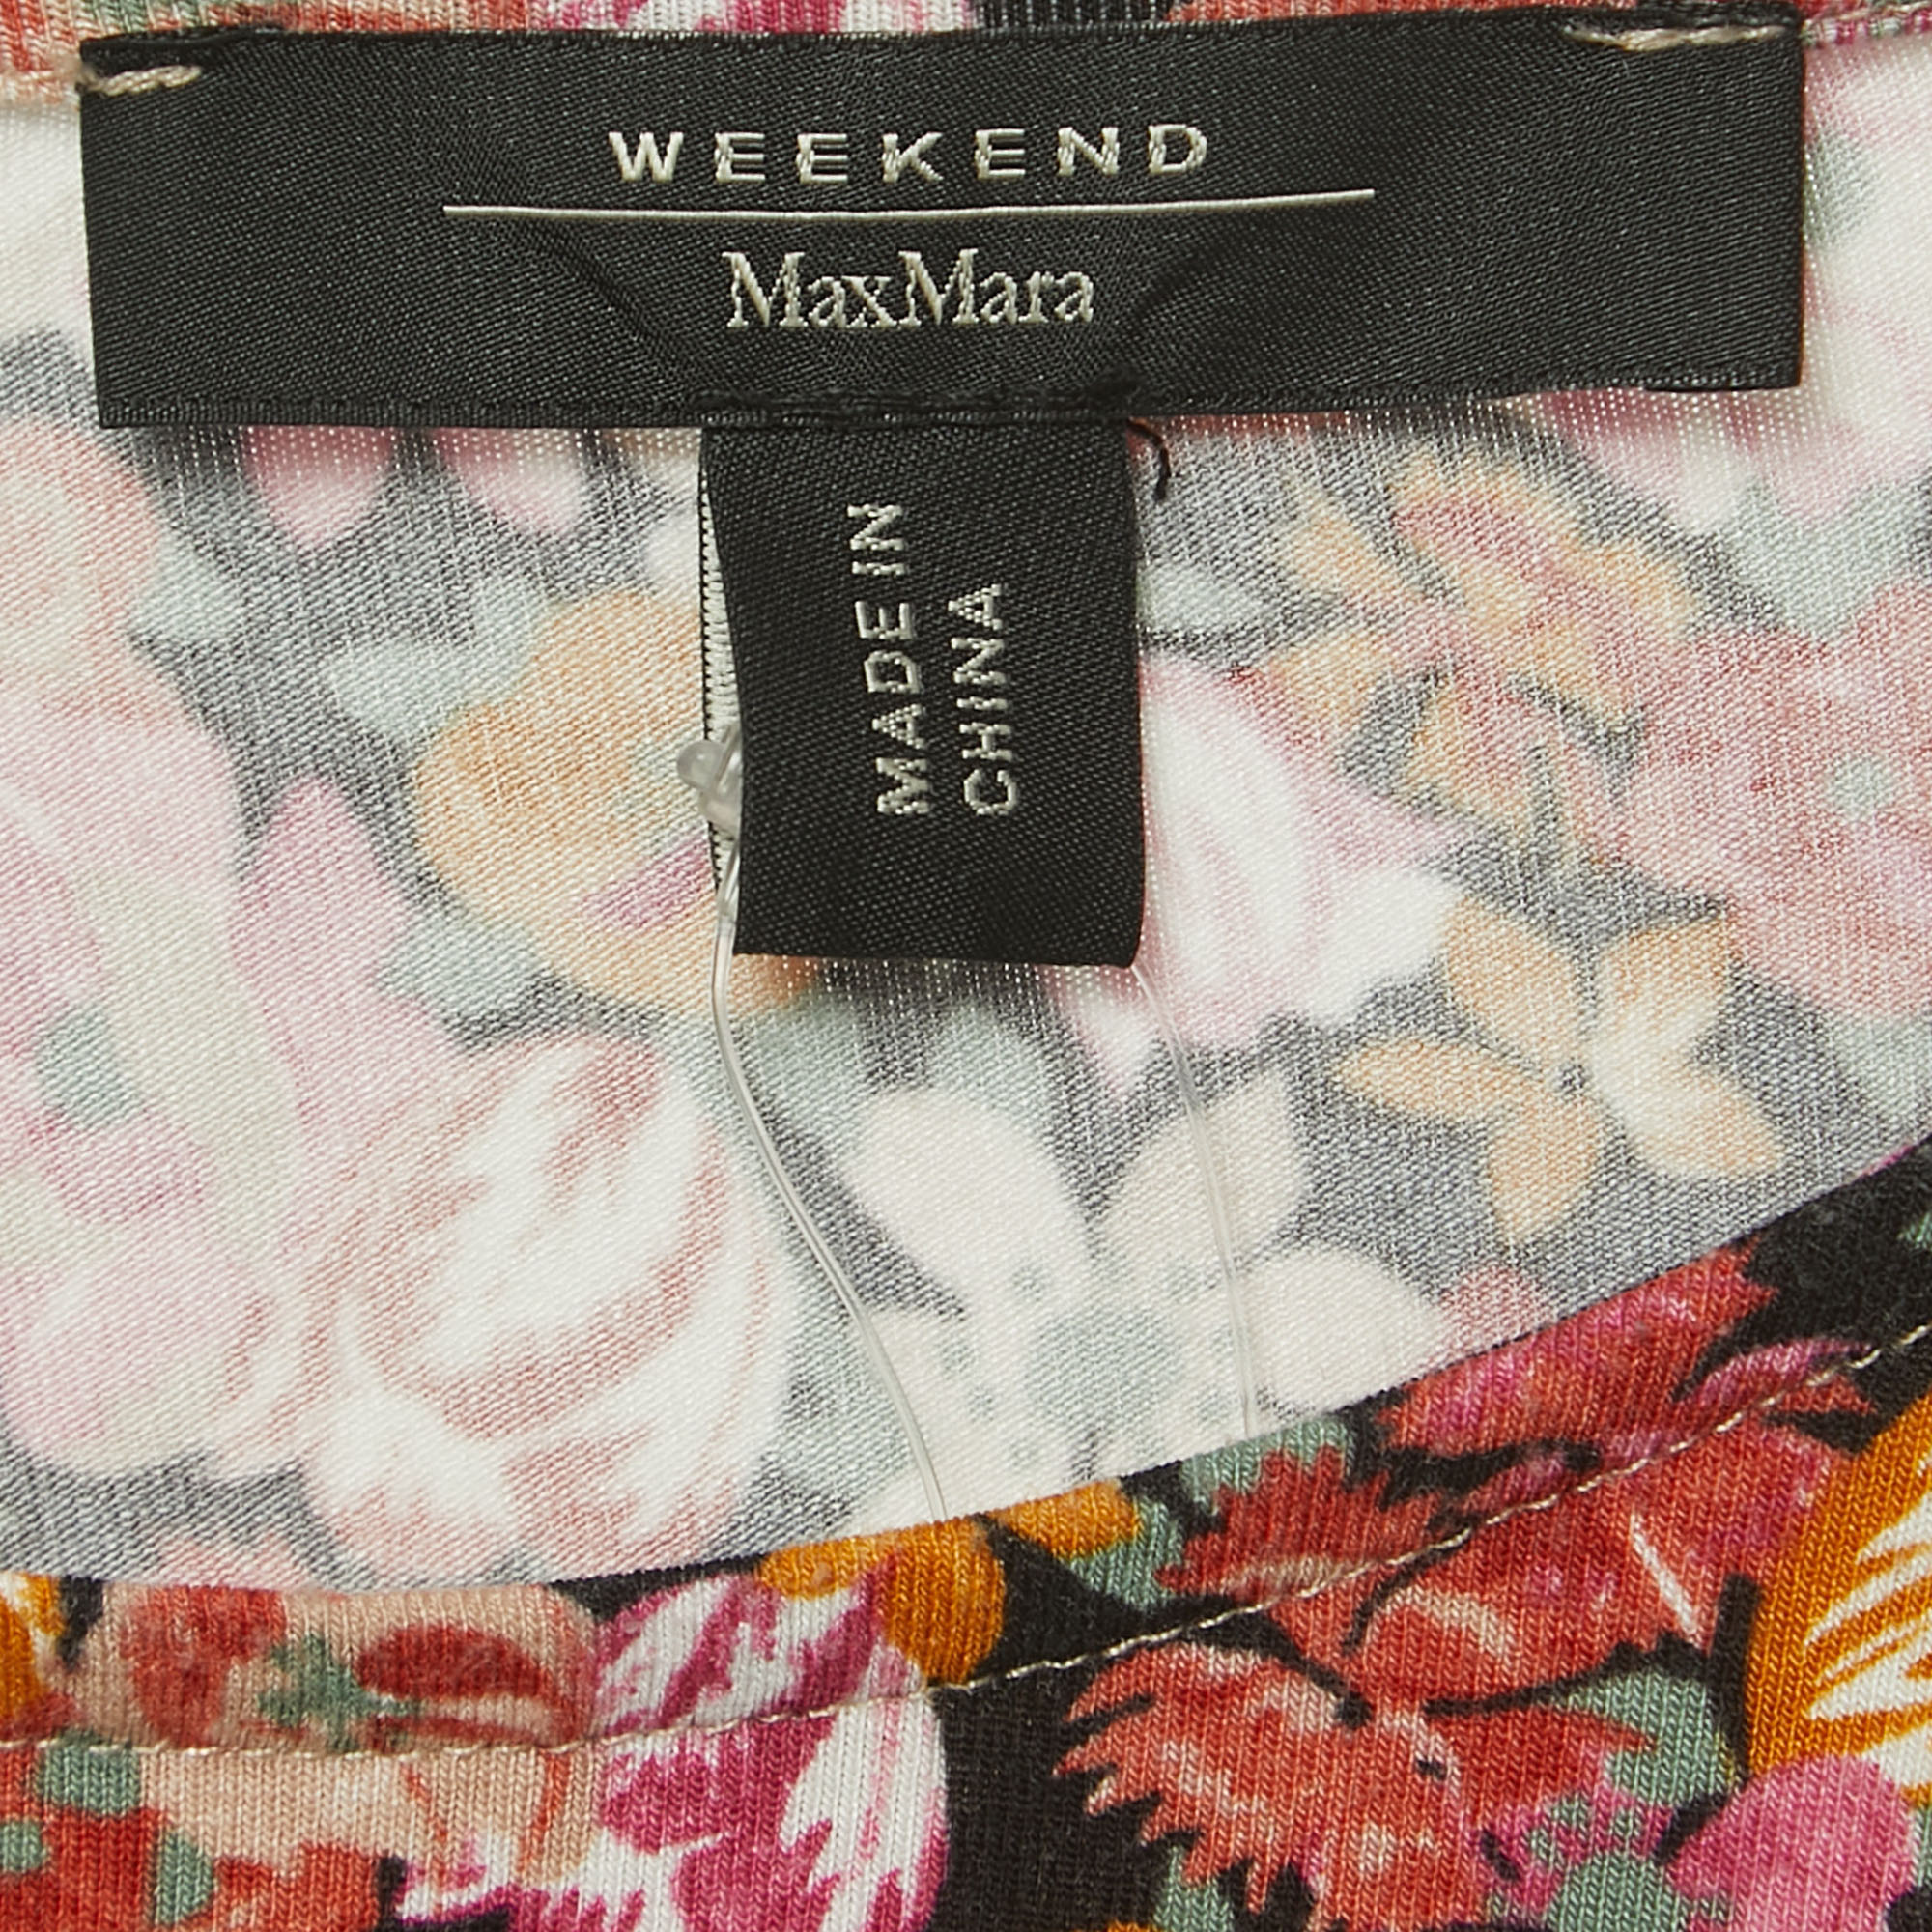 Weekend Max Mara Multicolor Floral Printed Jersey Top L